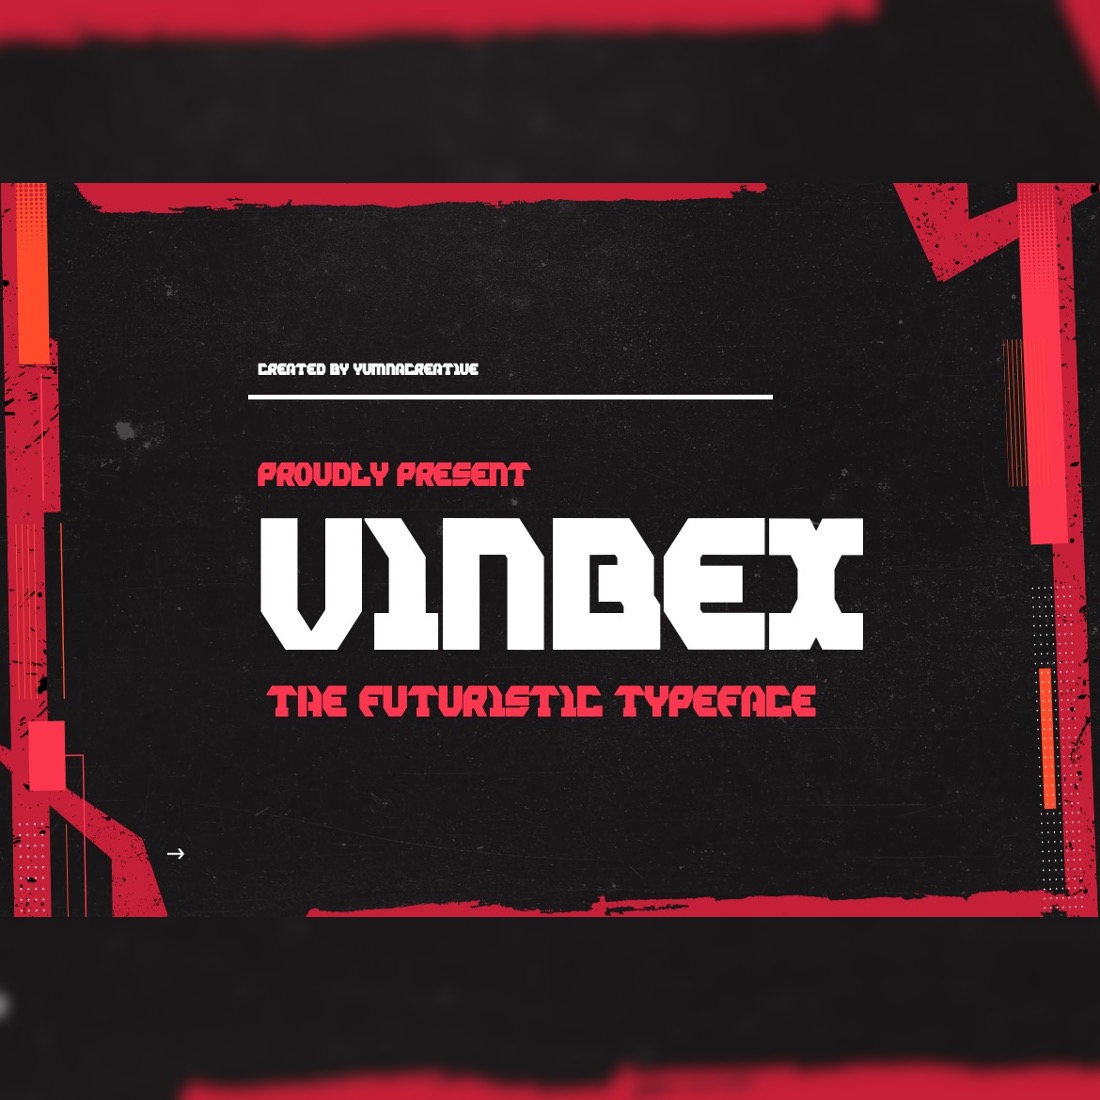 Vinbex - Futuristic Font cover image.